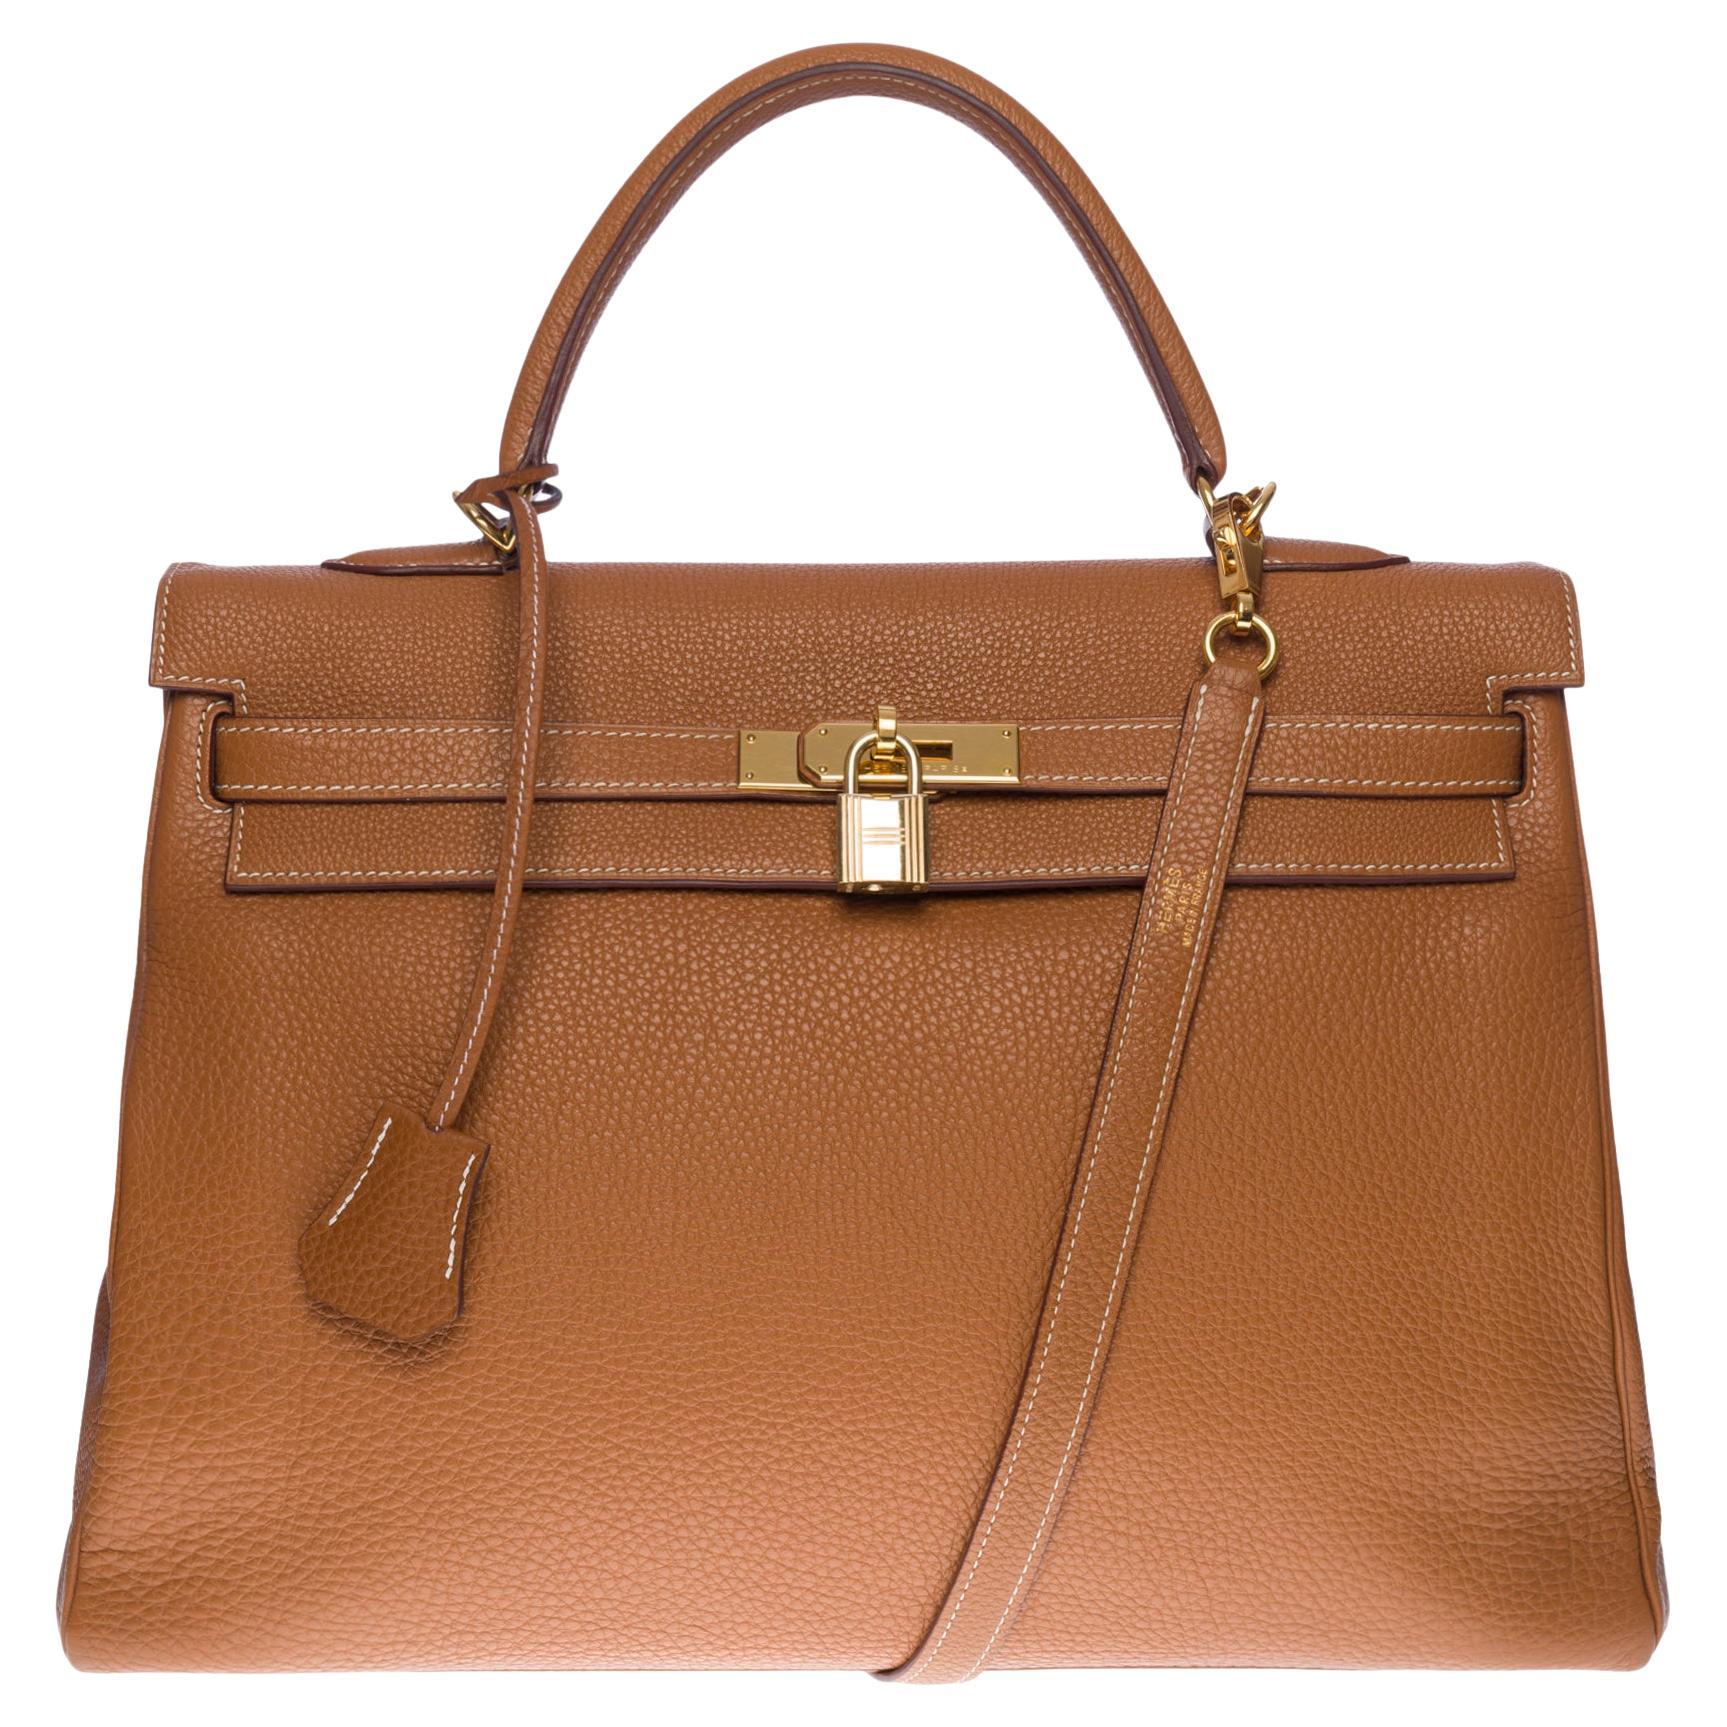 Gorgeous Hermès Kelly 35 retourné handbag strap in Gold Togo leather, GHW